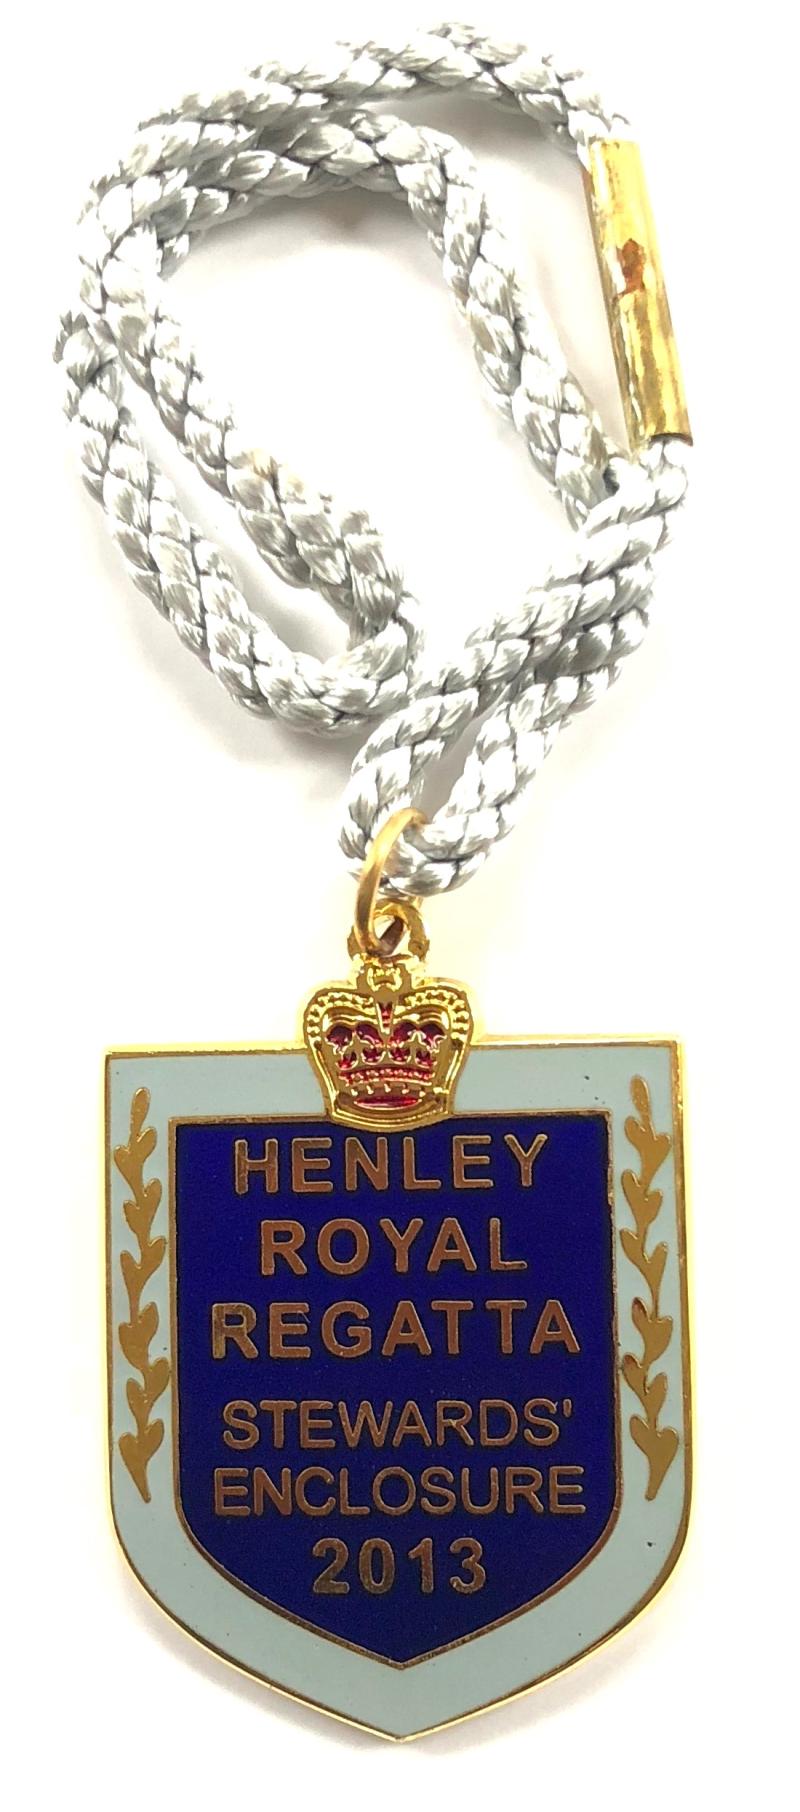 2013 Henley Royal Regatta stewards enclosure badge